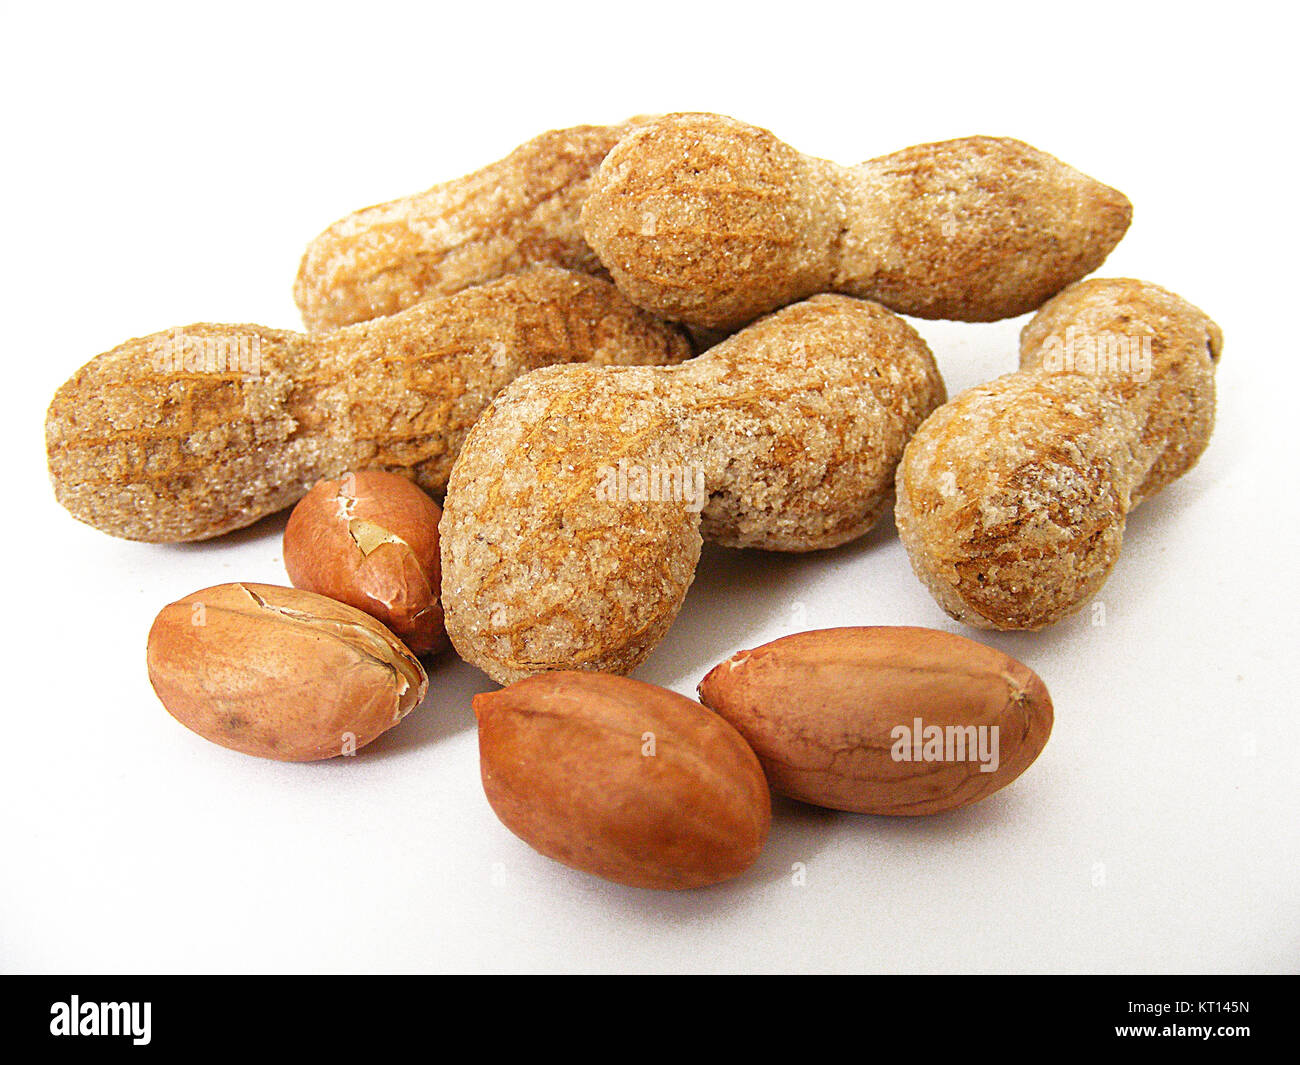 Peanut pictures Stock Photo